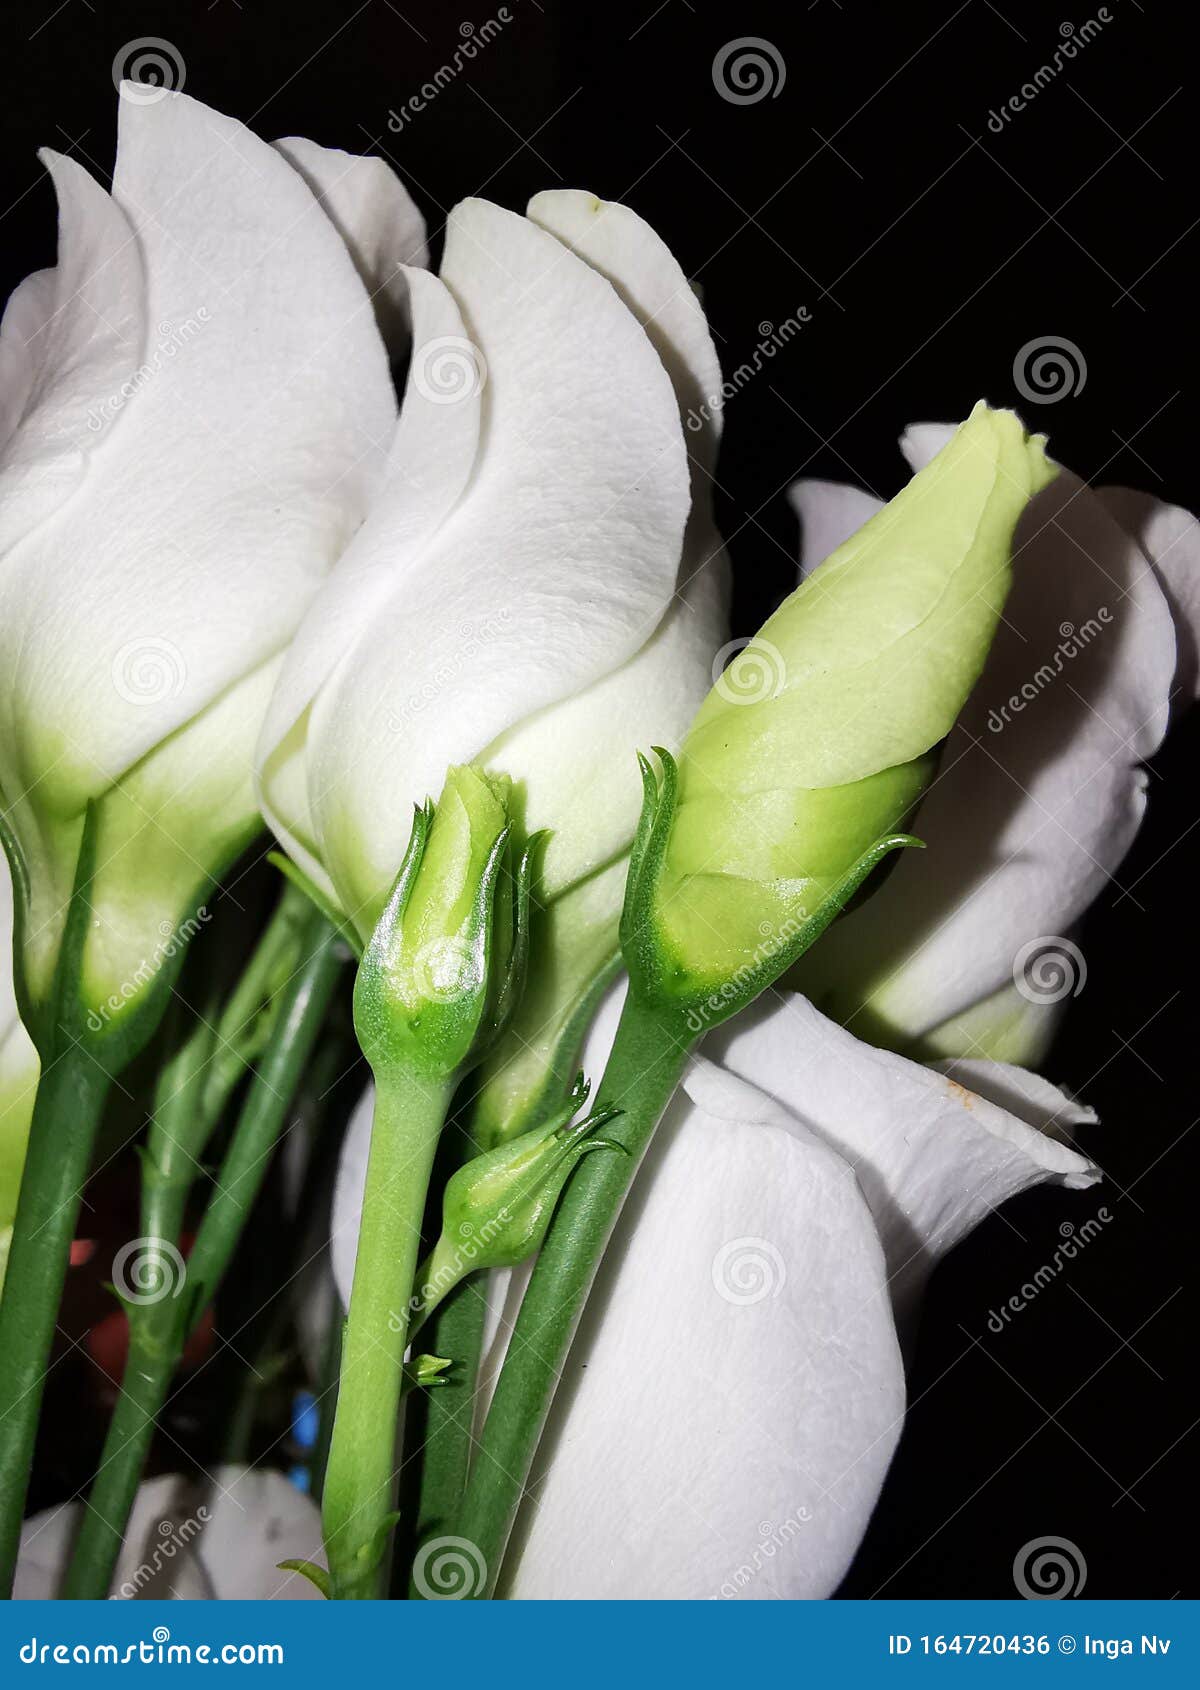 white flowers dancing in the dark